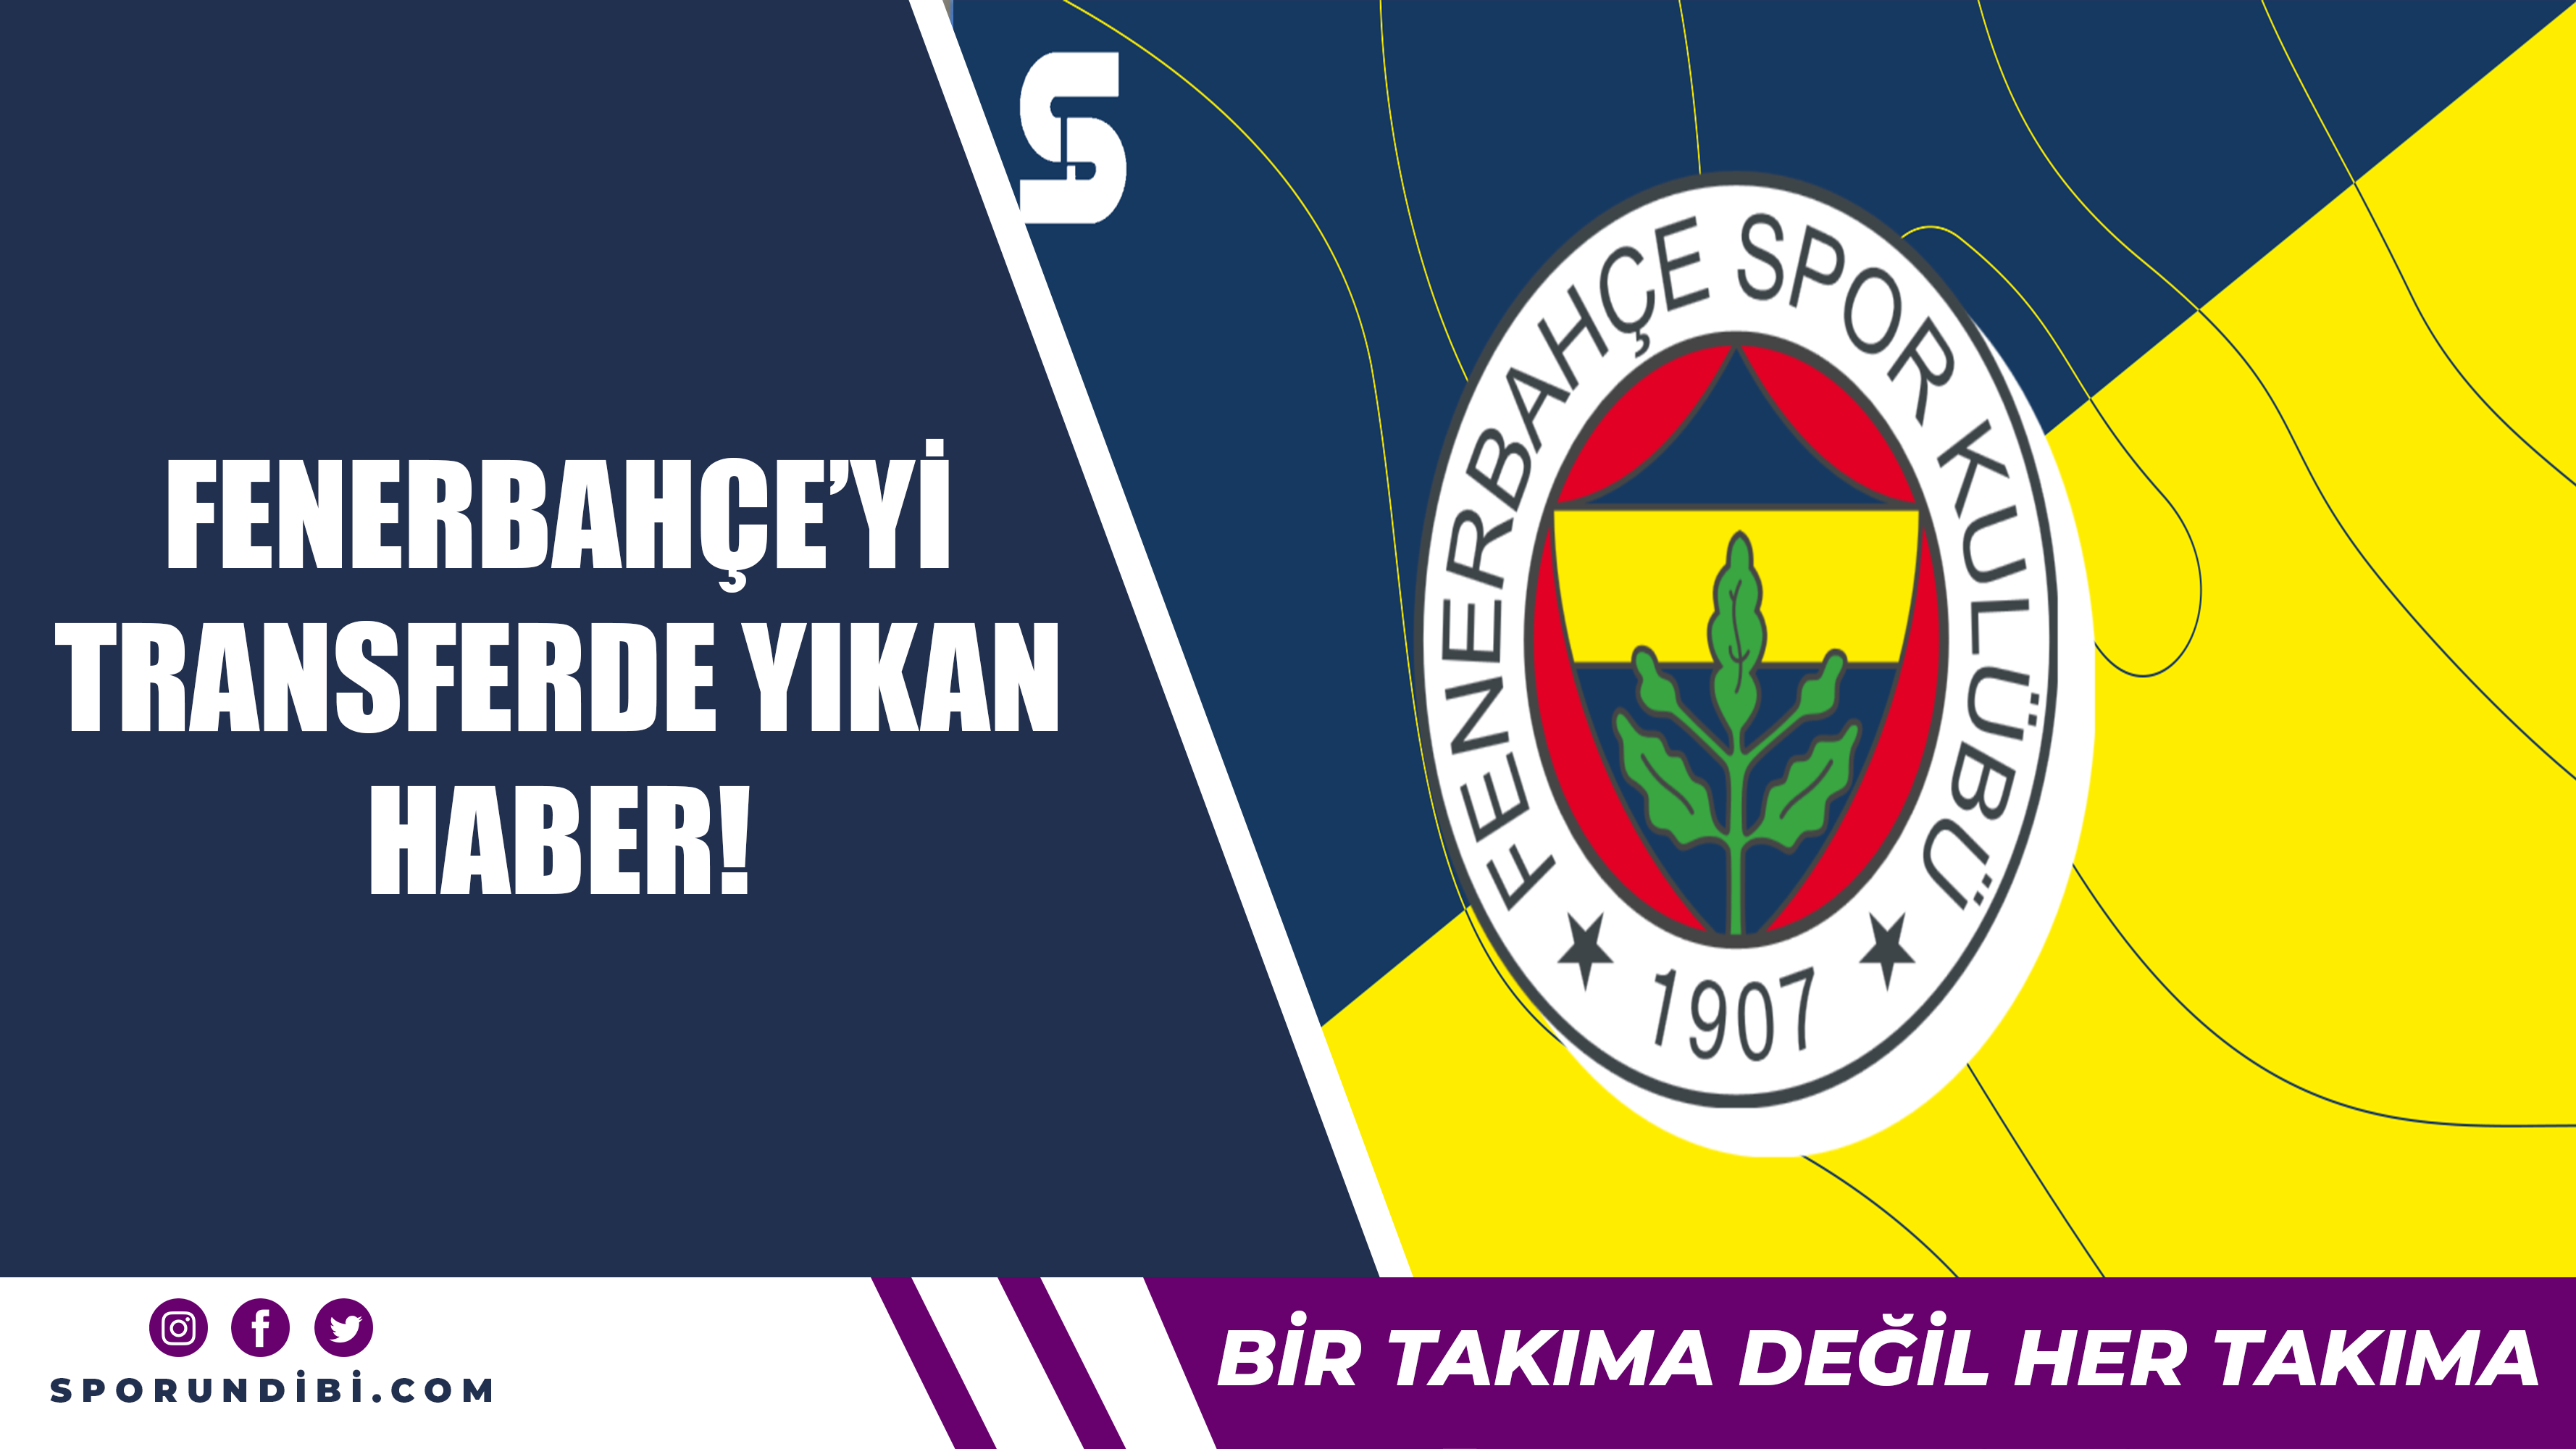 Fenerbahçe'yi transferde yıkan haber!